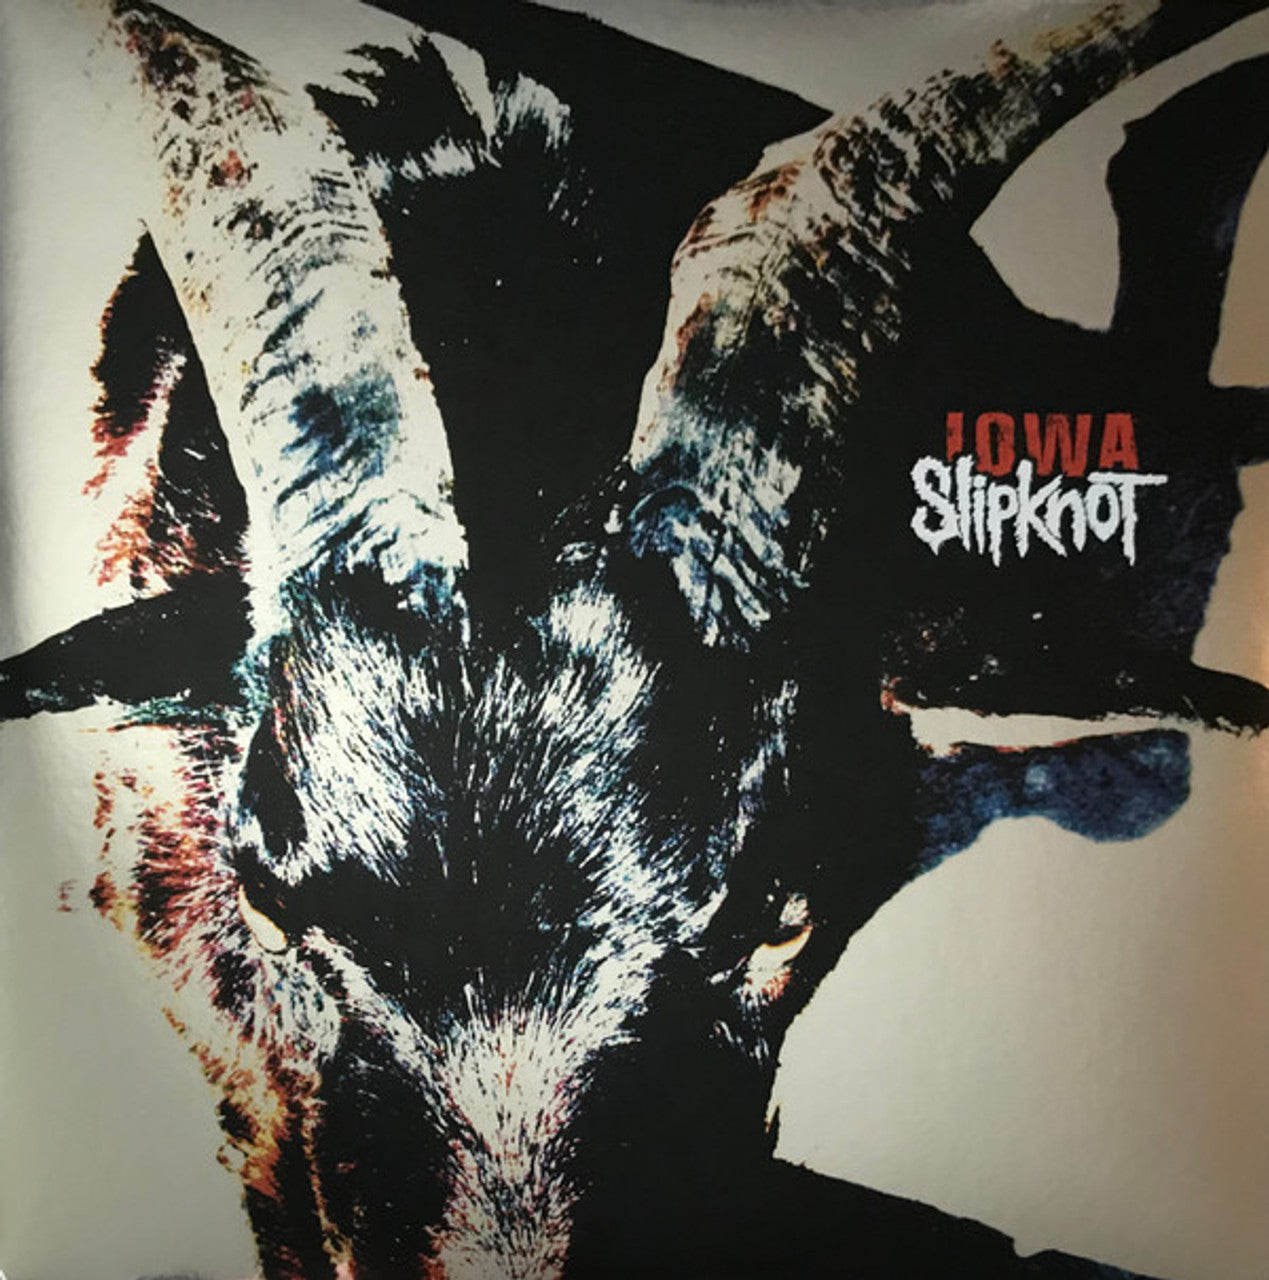 Slipknot ''Iowa'' 2xLP (Translucent Green)